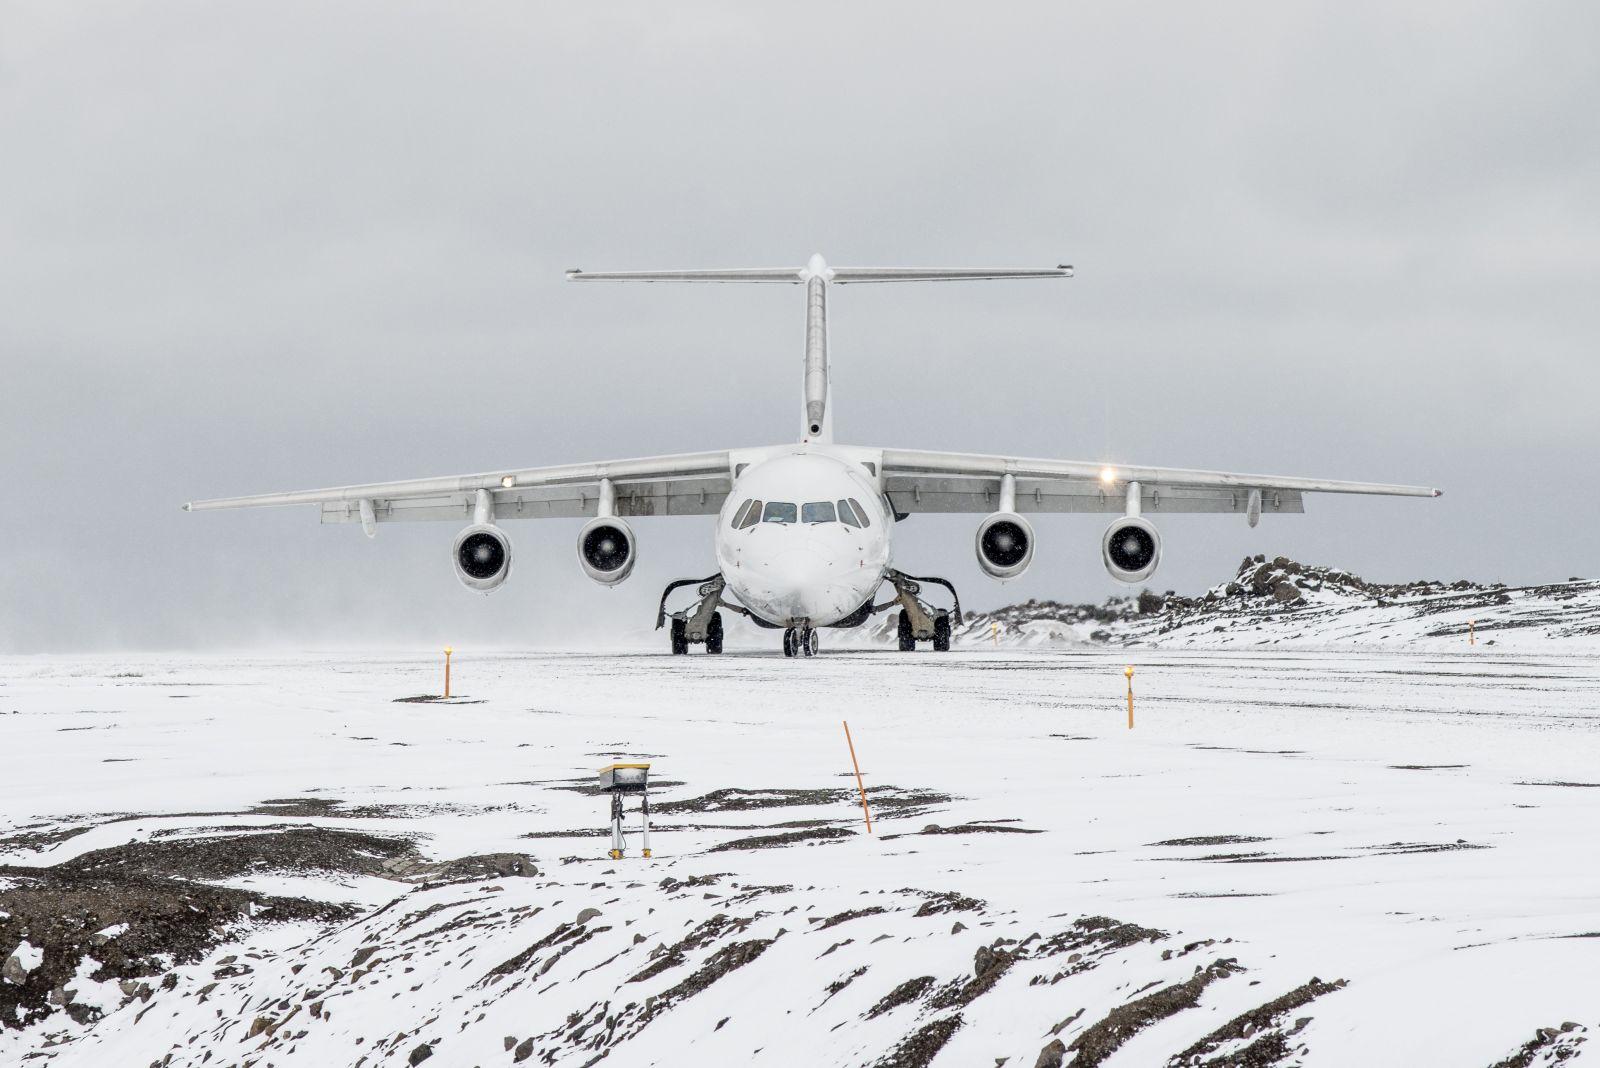 Antarctica21 plane landing on King George Island in Antarctica